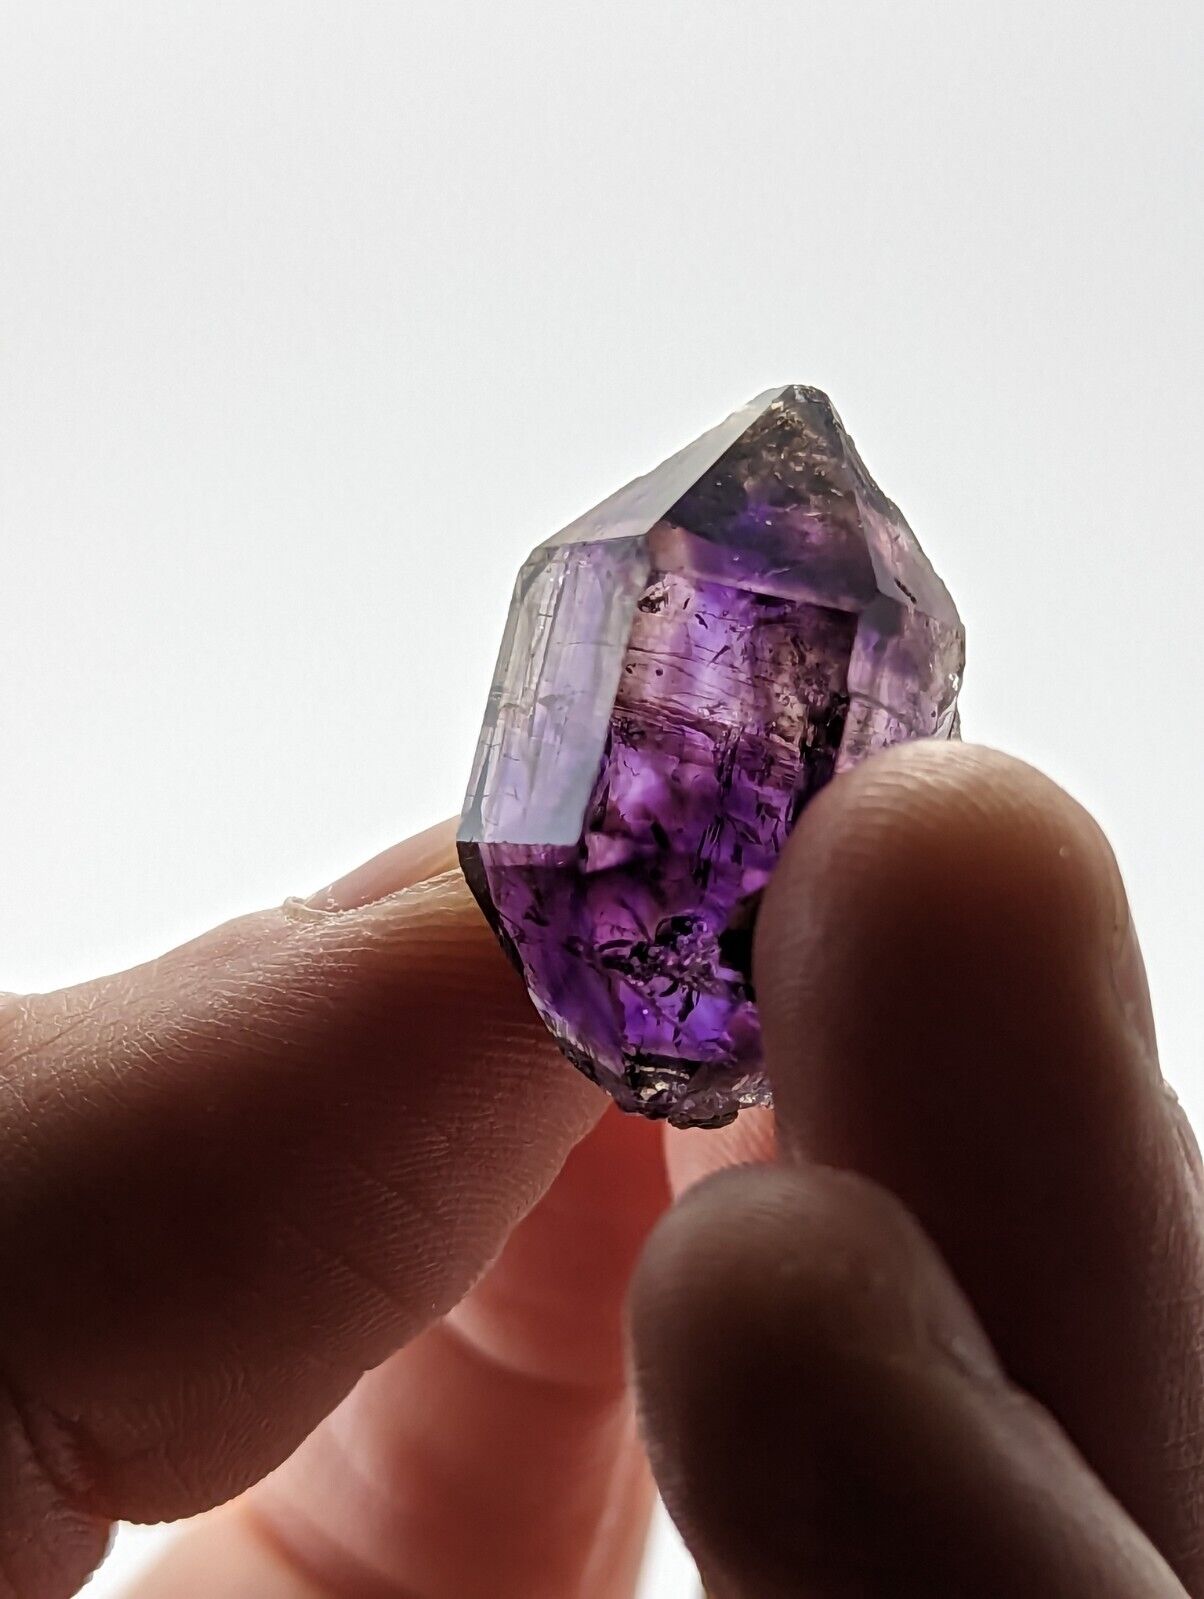 Shangaan Smoky Amethyst Quartz Crystal, from Chimbuku Mine, Zimbabwe, DT